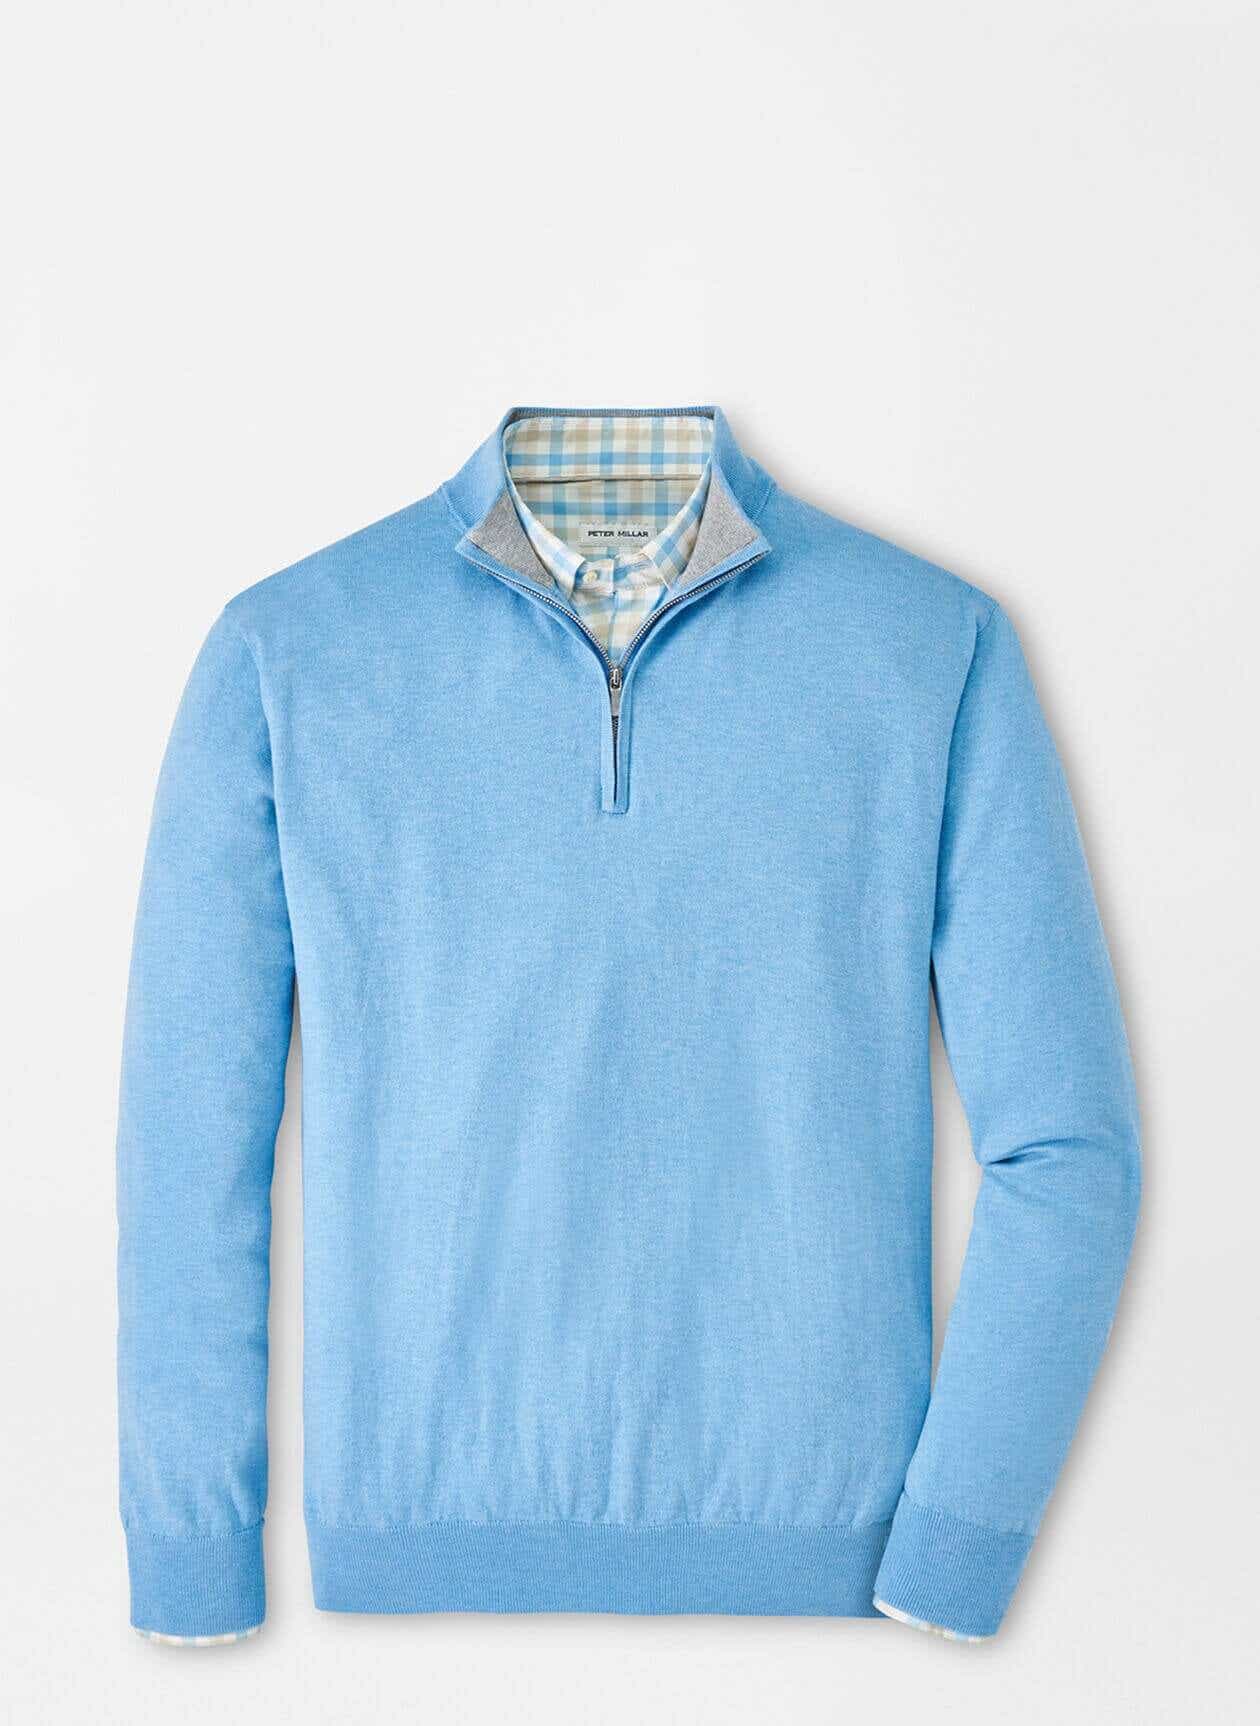 peter millar blue crest sweater